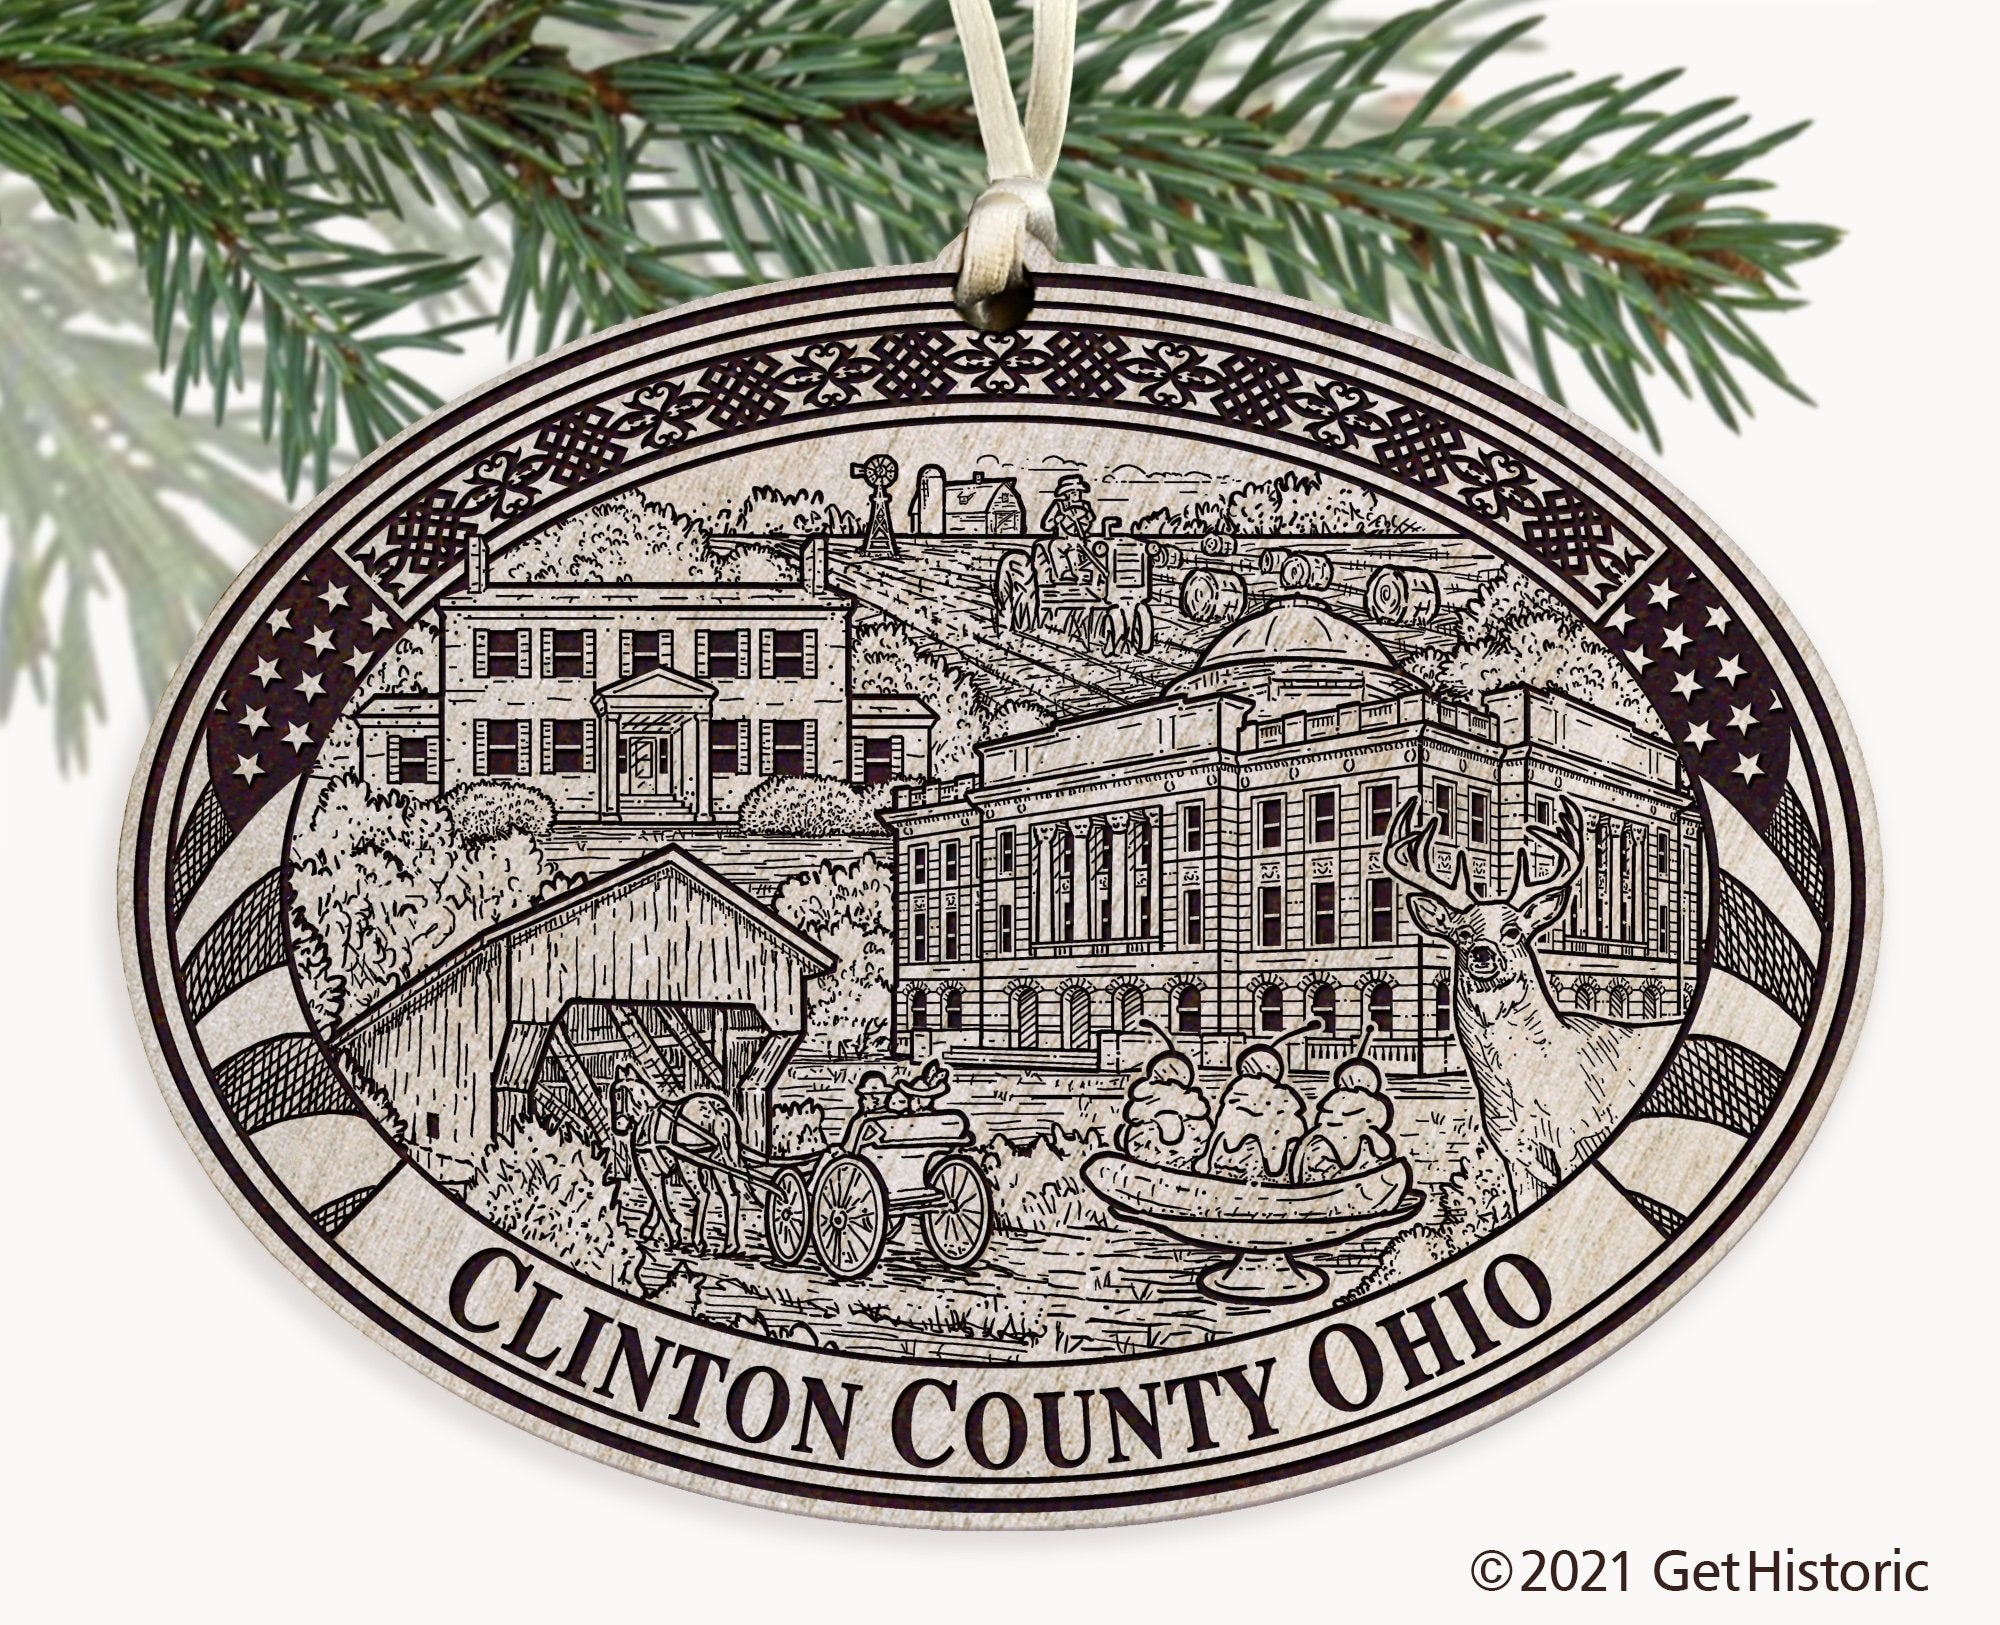 Clinton County Ohio Engraved Ornament